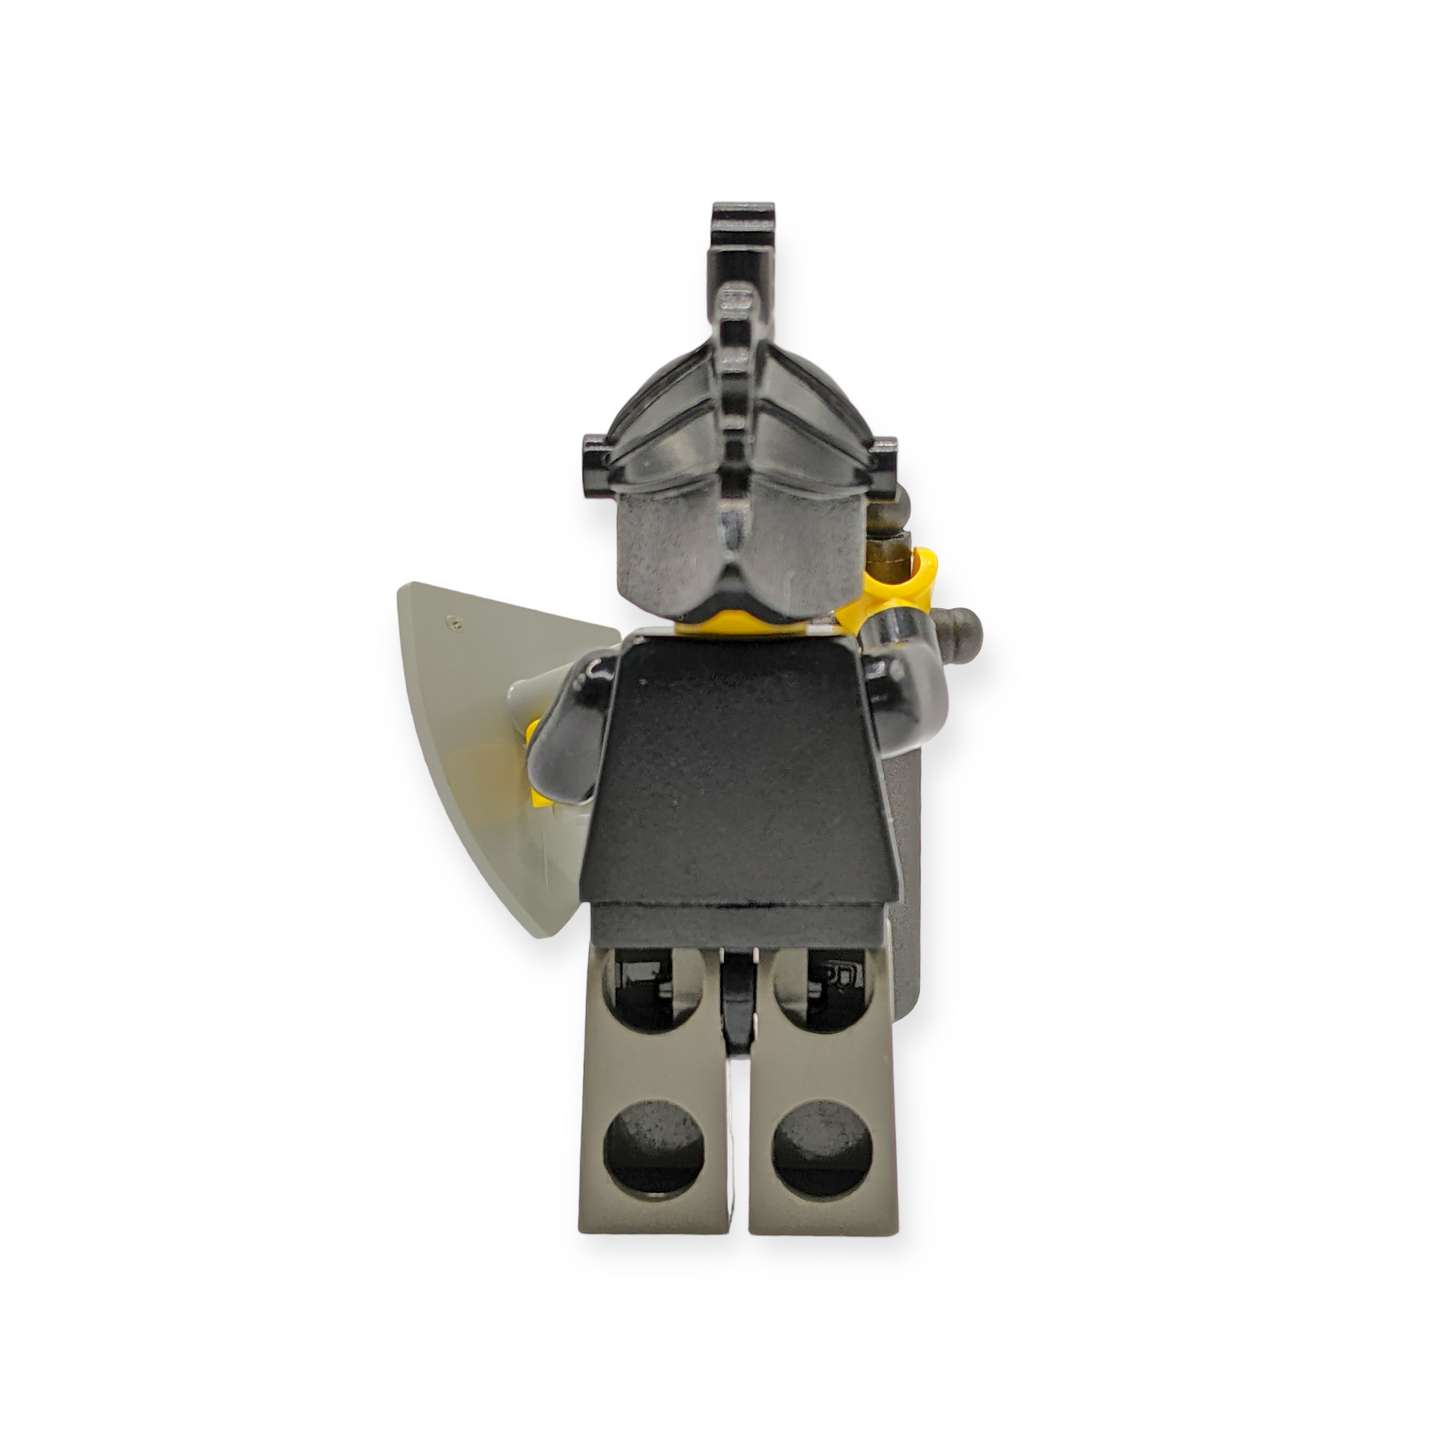 LEGO Minifigur Castle Fright Knights - Knight 1 Black Dragon Helmet cas250